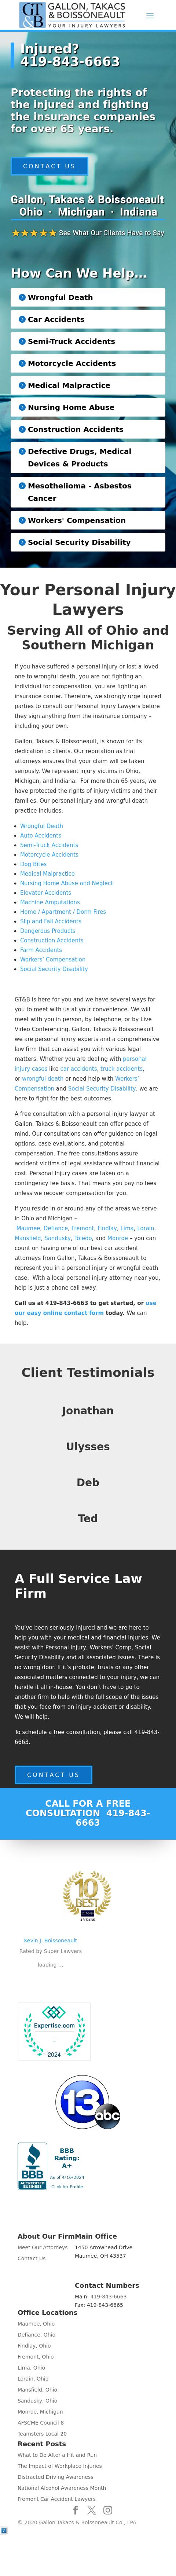 Gallon Takacs Boissoneault & Schaffer Co LPA - Toledo OH Lawyers